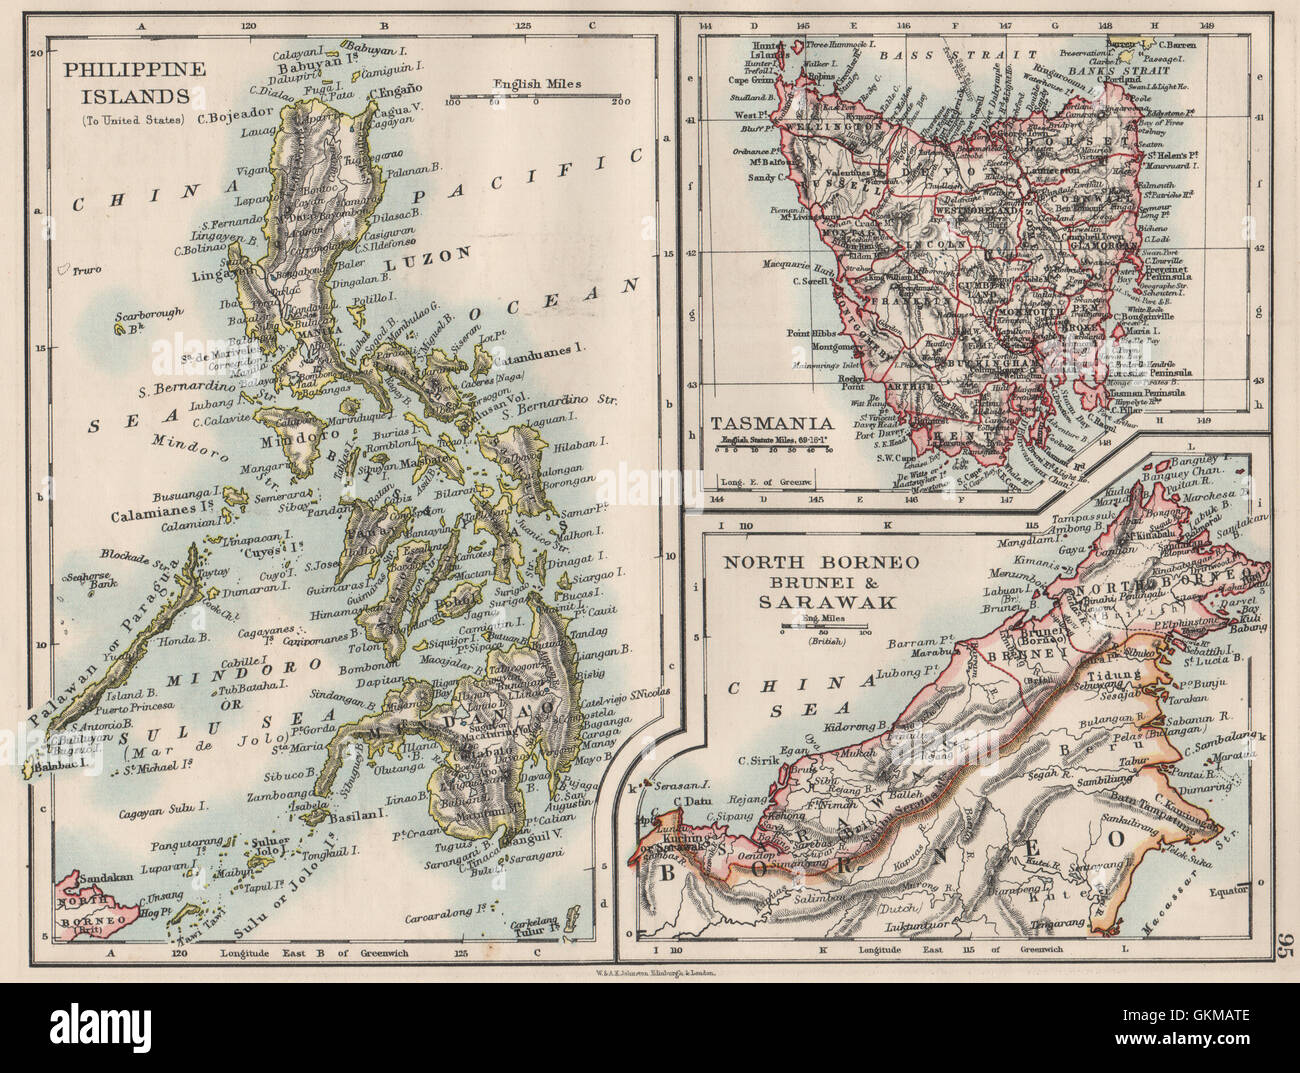 EAST ASIA. Philippines Tasmania North Borneo Brunei Sarawak. JOHNSTON, 1900 map Stock Photo